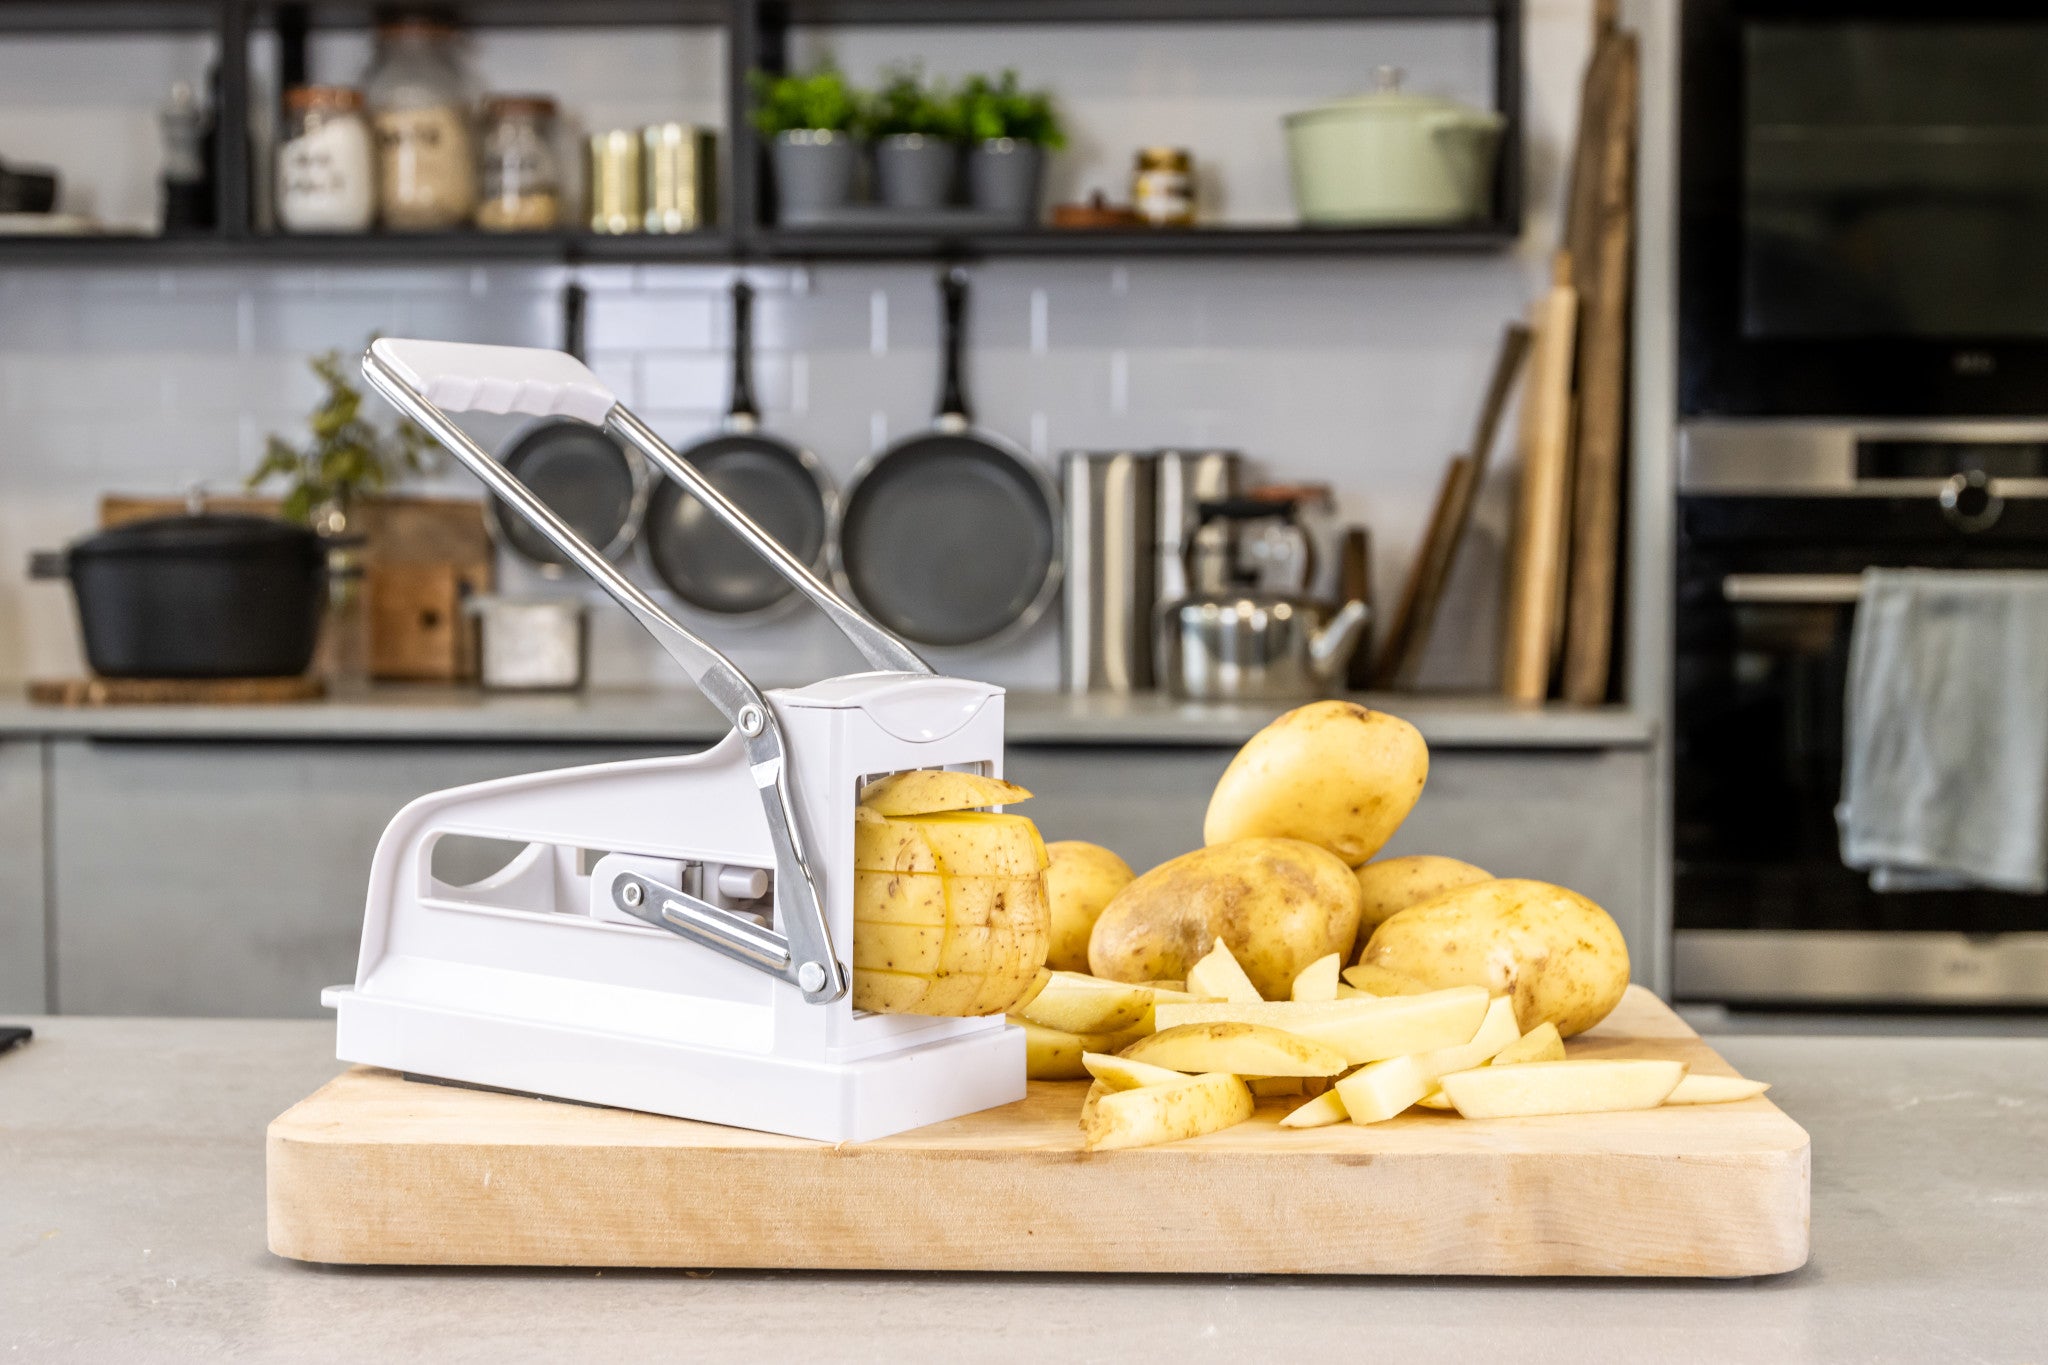 KitchenCraft Potato Chipper with Interchangeable Blades – CookServeEnjoy